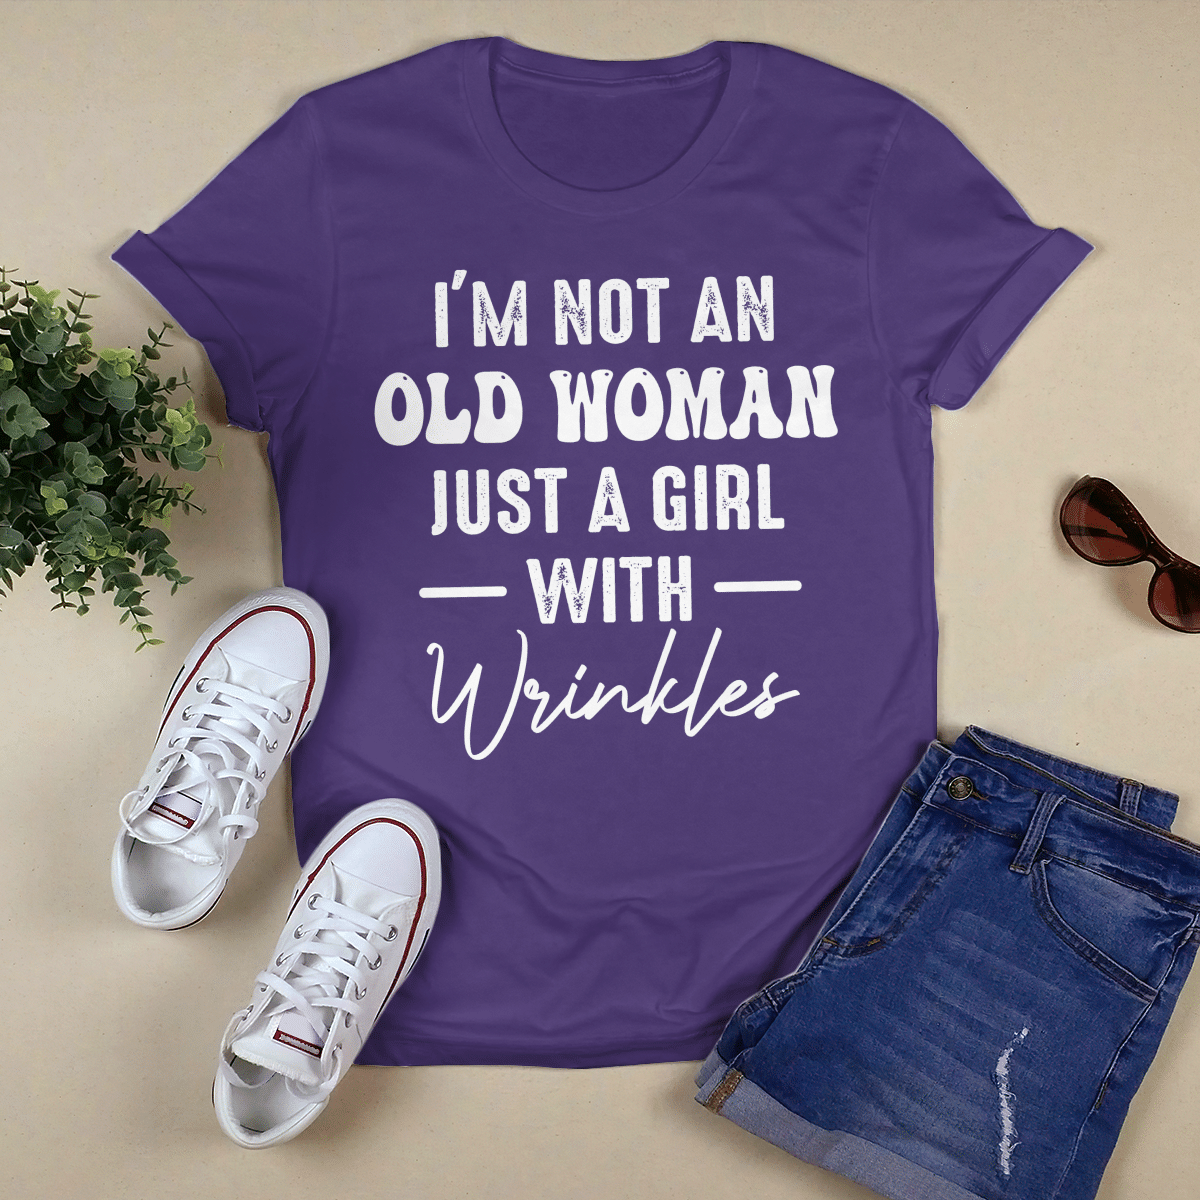 I_m Not An Old Woman shirt